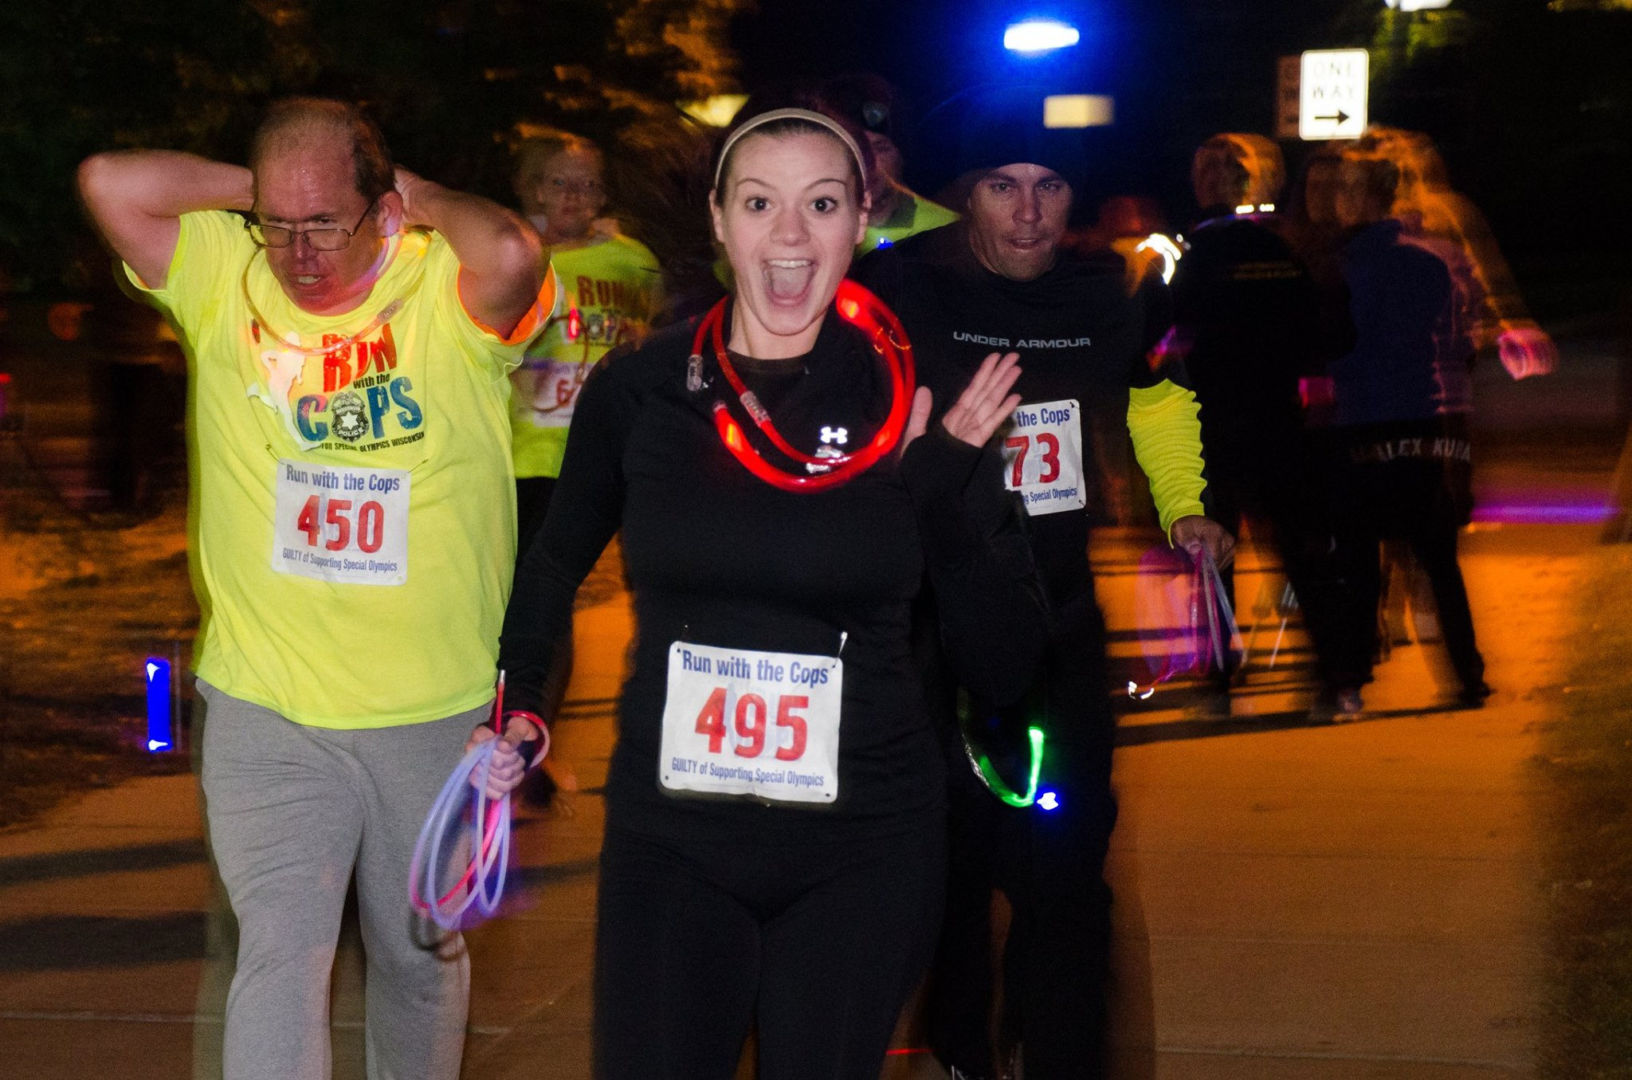 A runner shows off her glow gear